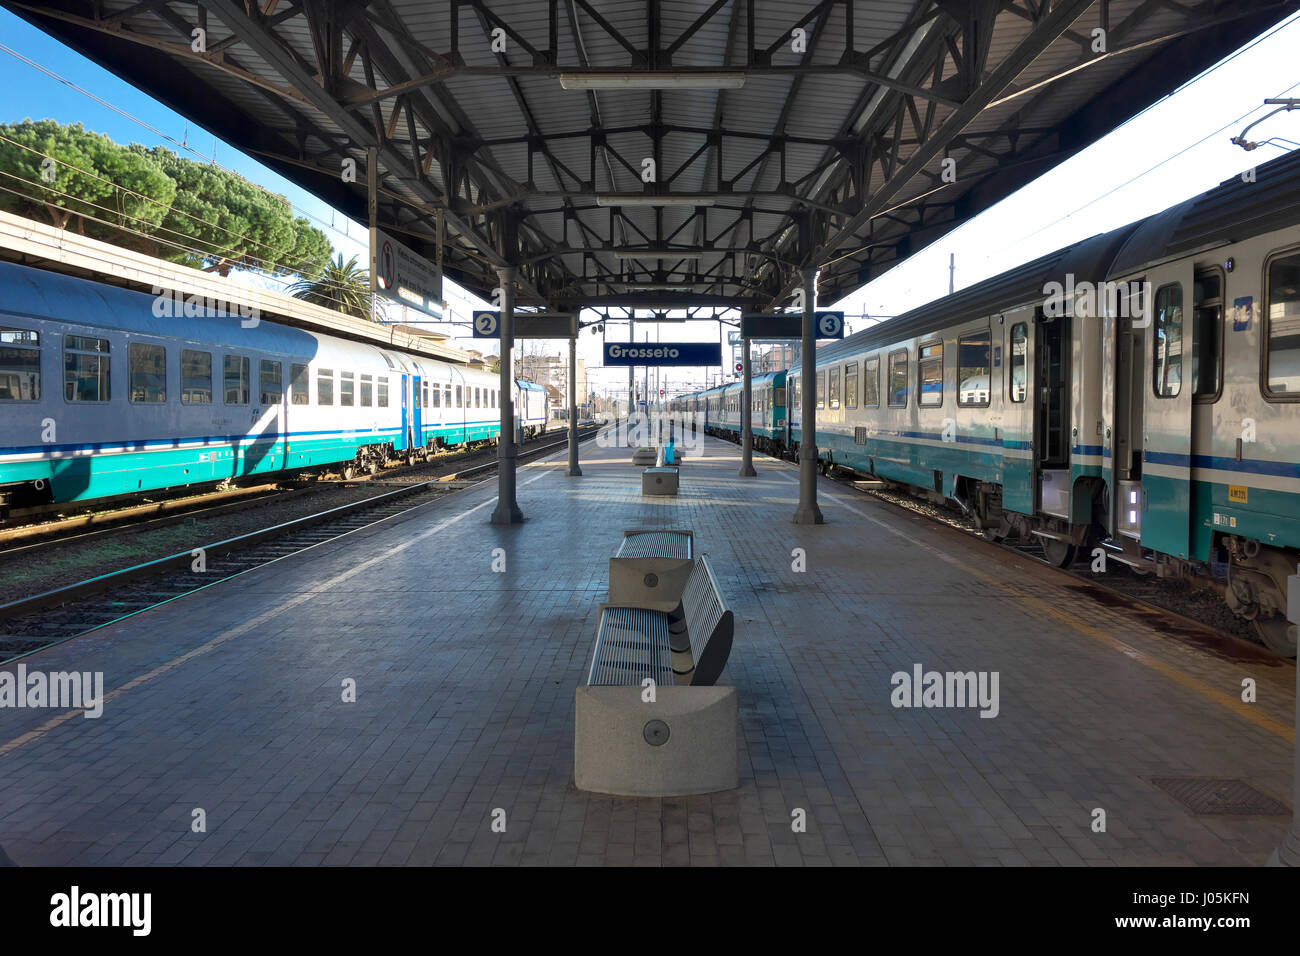 Railway station trains and platforms series - Grosseto, Tuscany, Italy, Europe Stock Photo